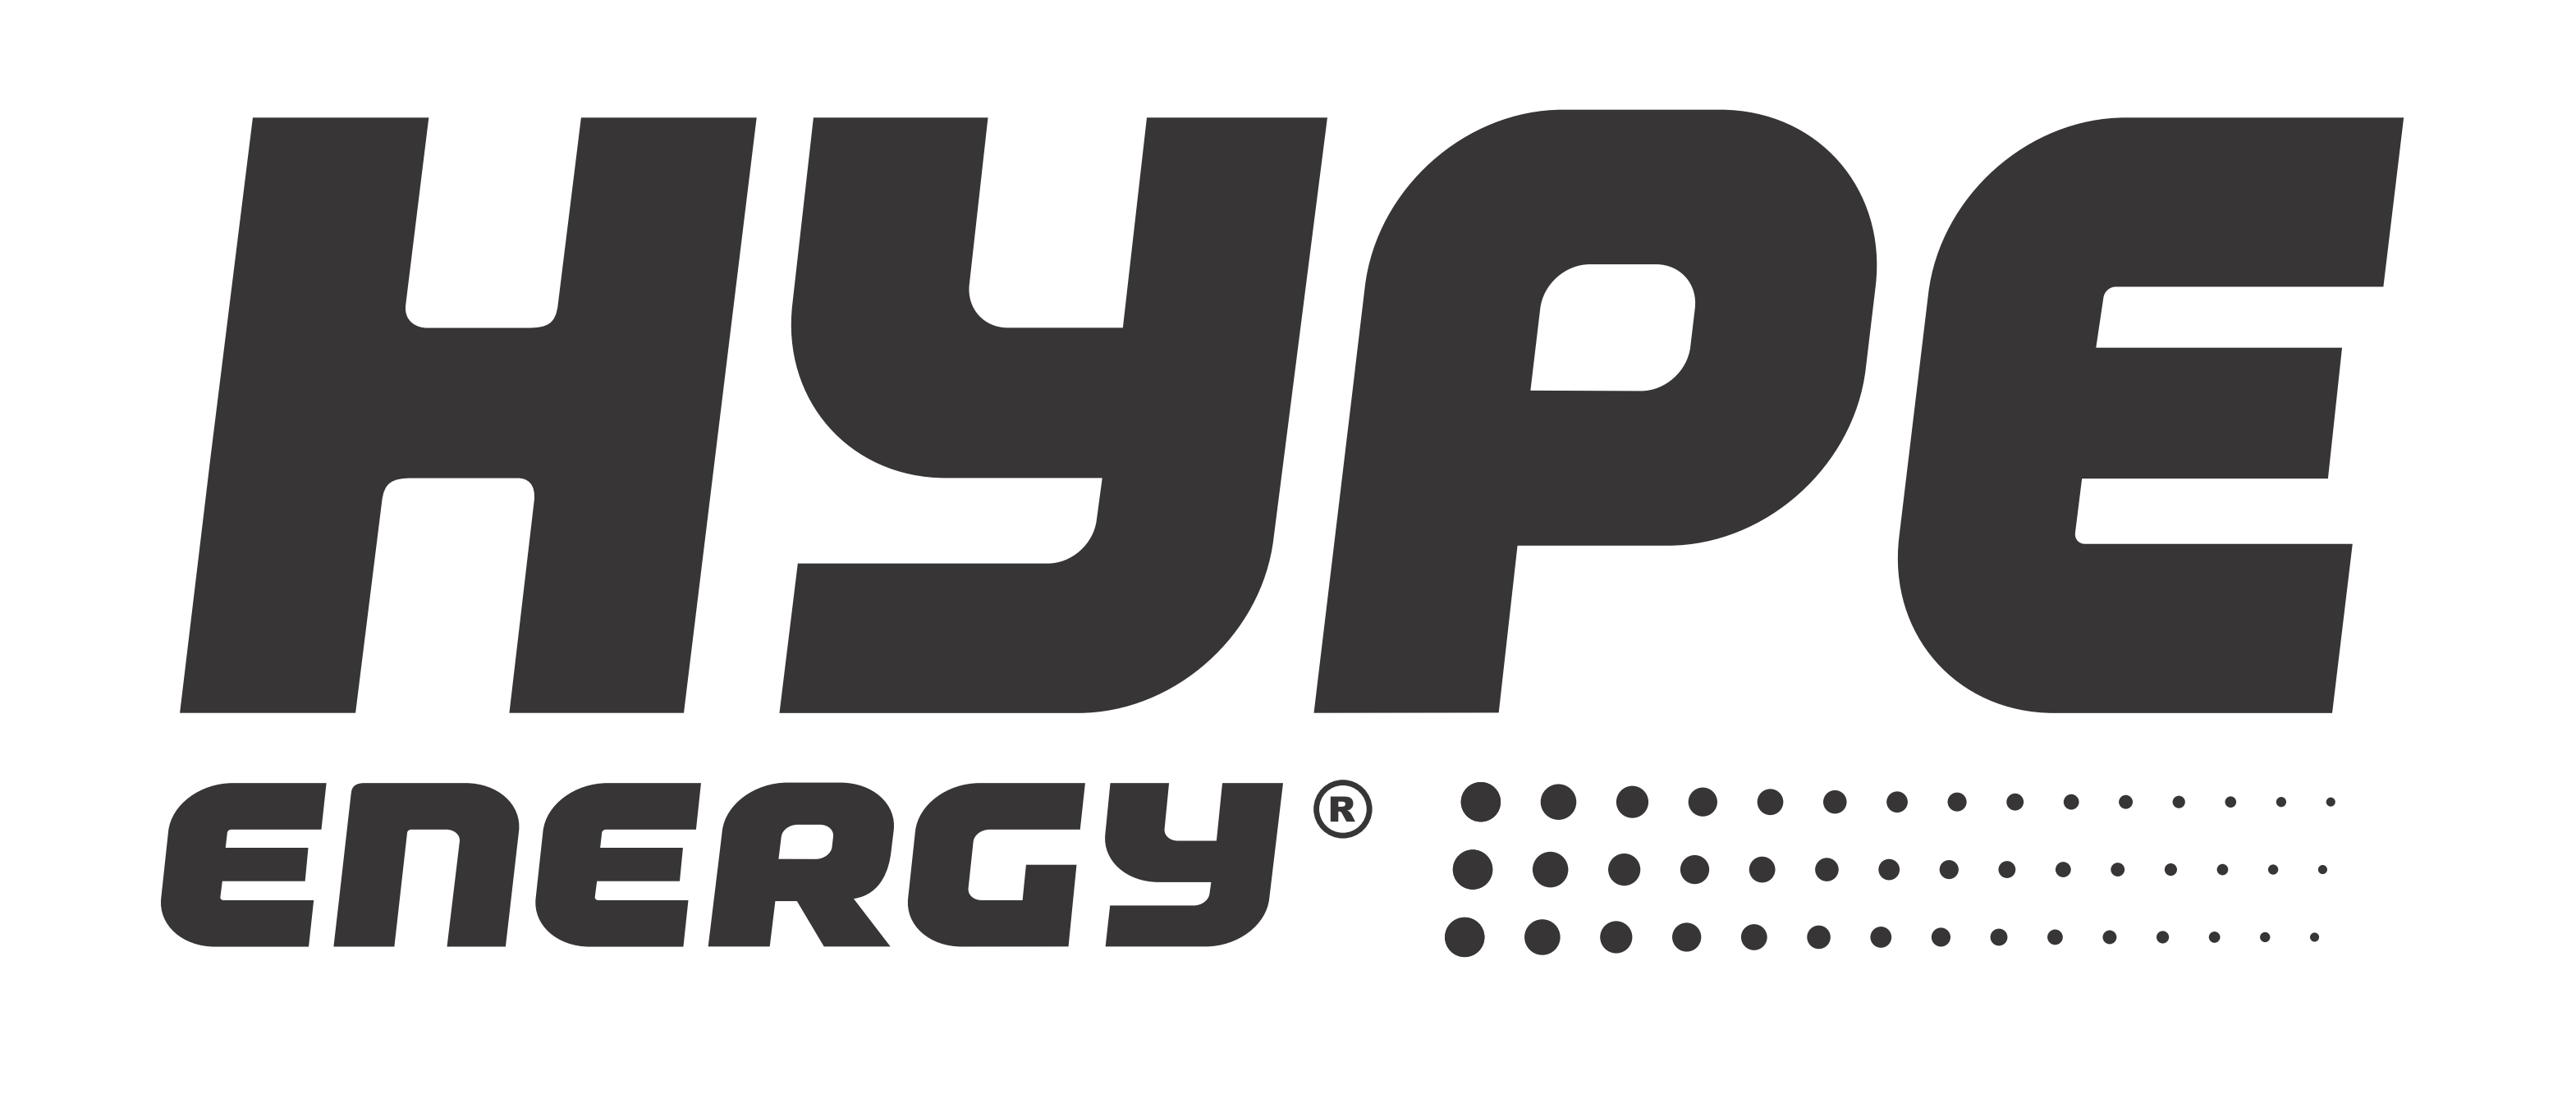 Hype логотип. Energy логотип. Хайп Энерджи. Energy Drink логотип. Надпись лит энерджи